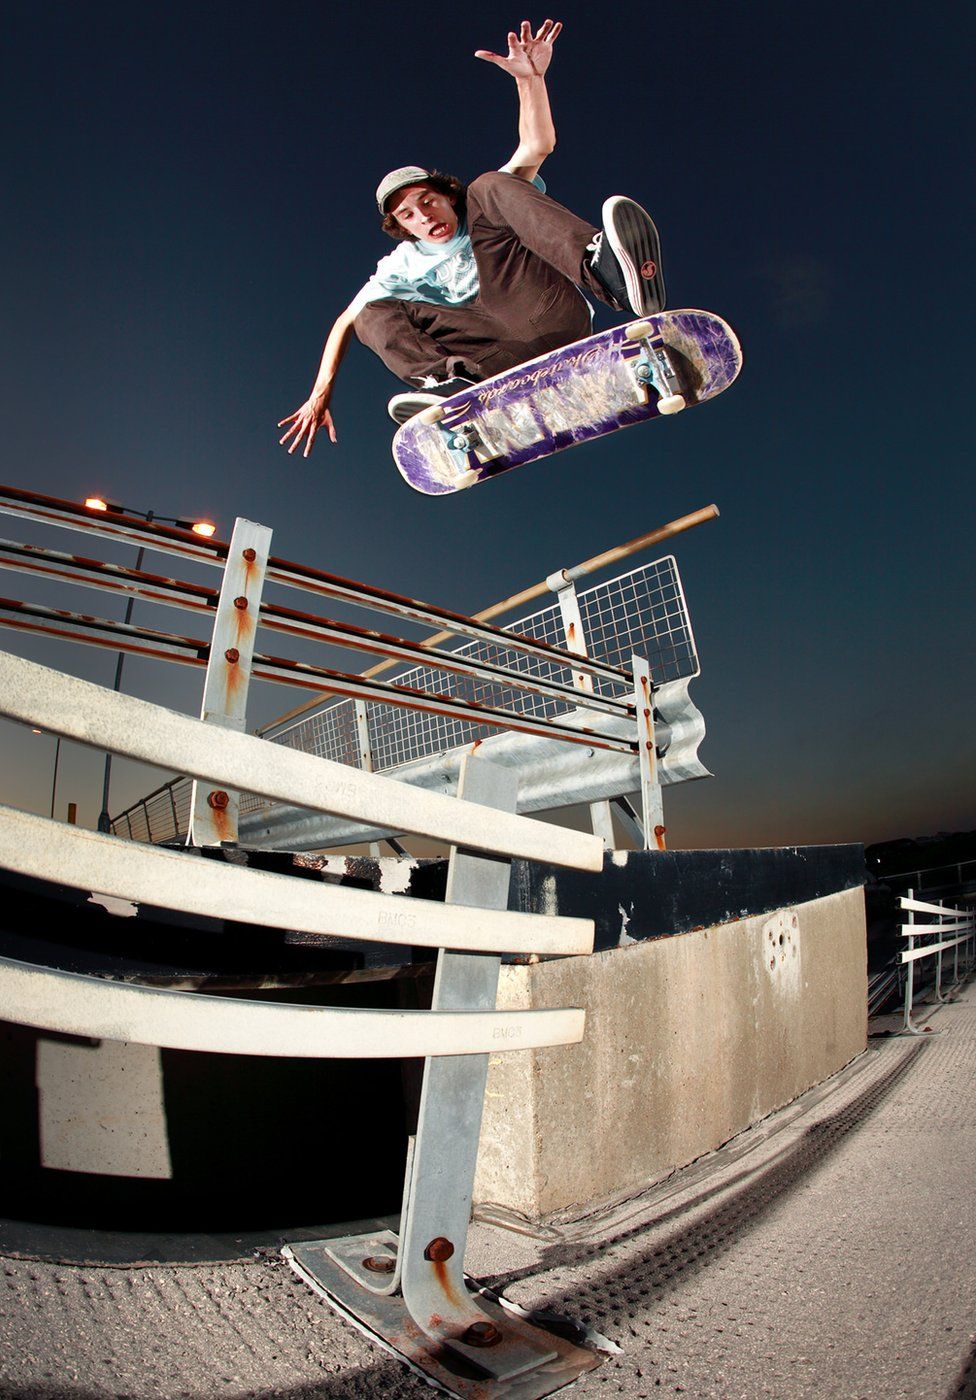 Skateboarder jumping